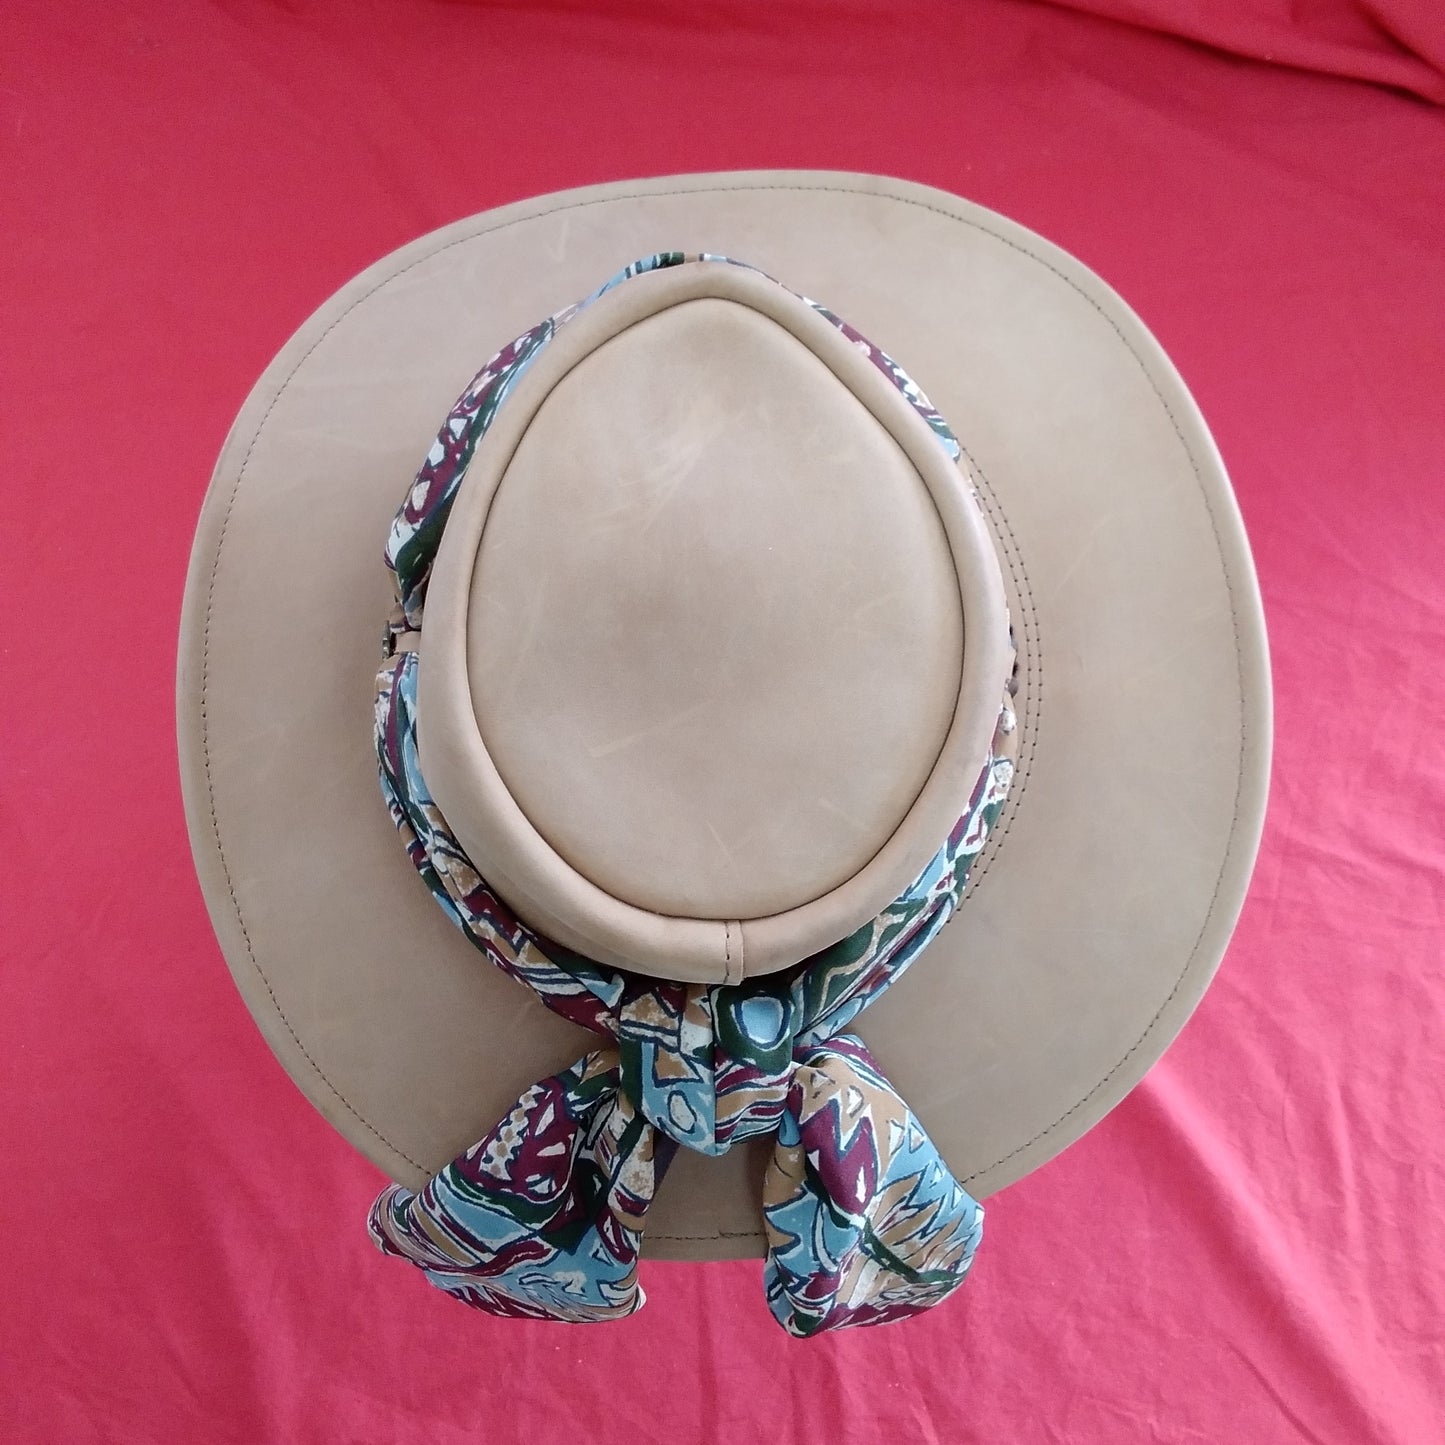 Jackaroo Leather Rancher Hat Scarf Boho - Size: S